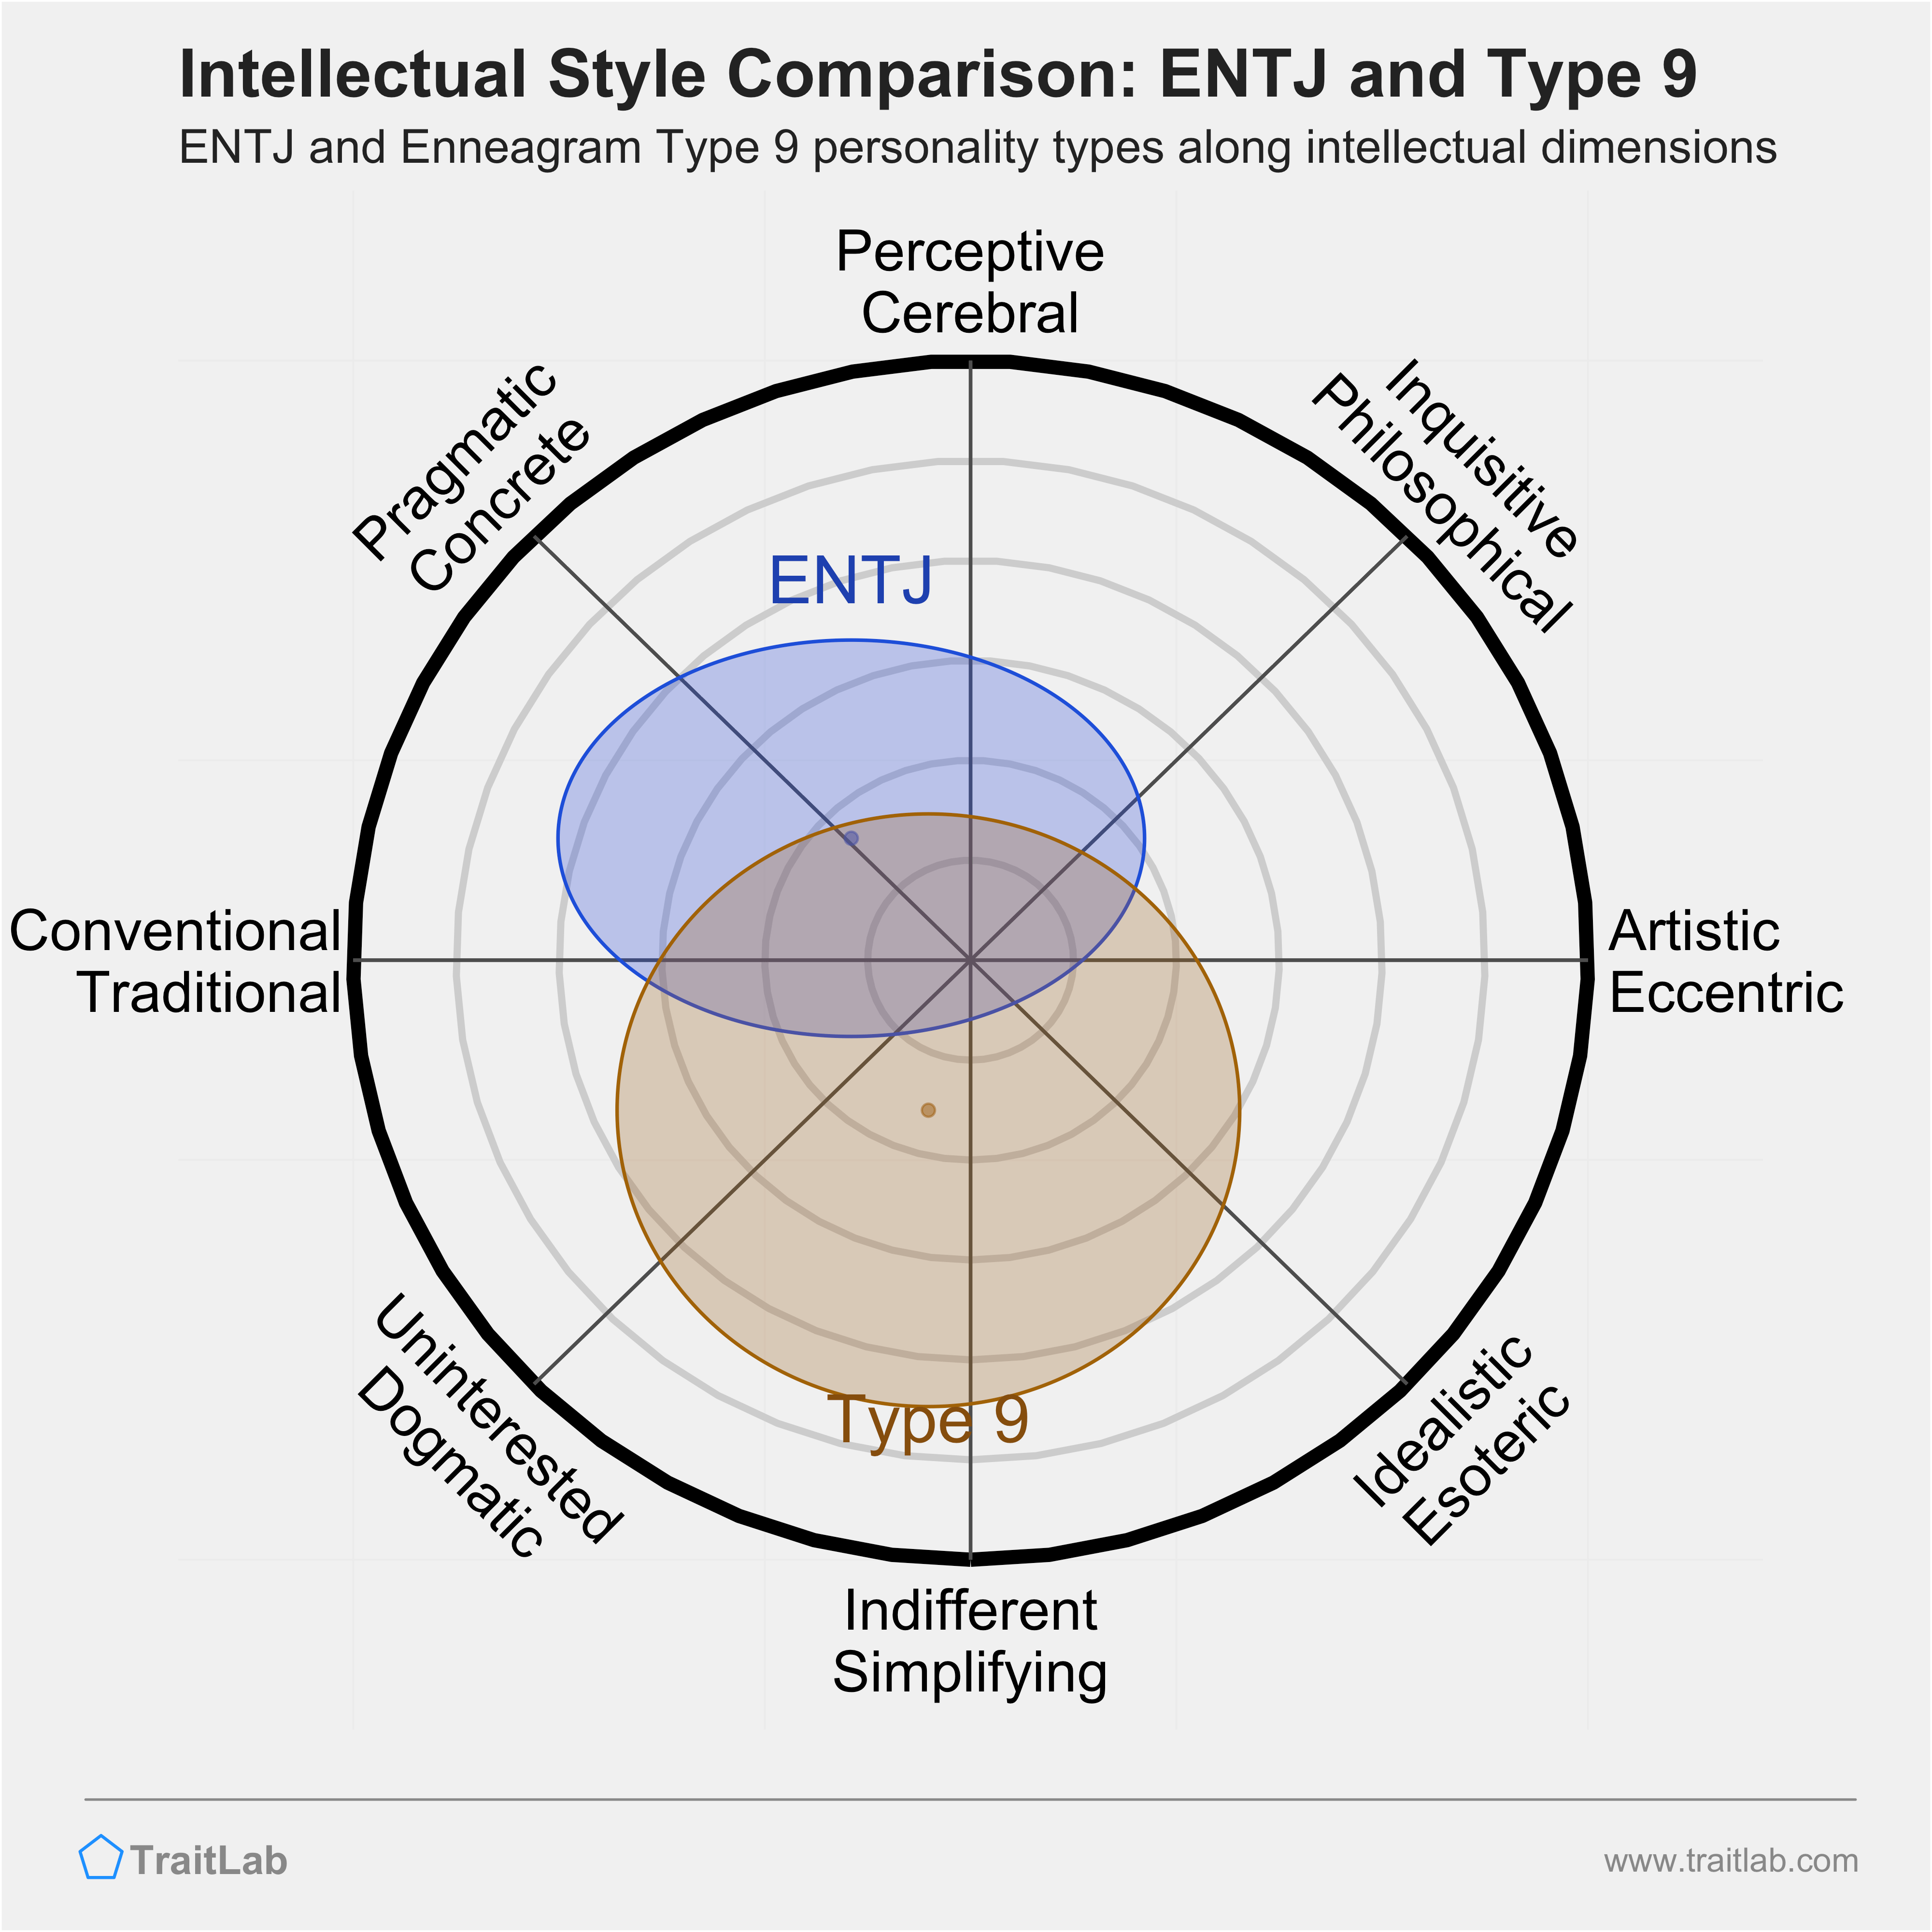 ENTJ and Type 9 comparison across intellectual dimensions